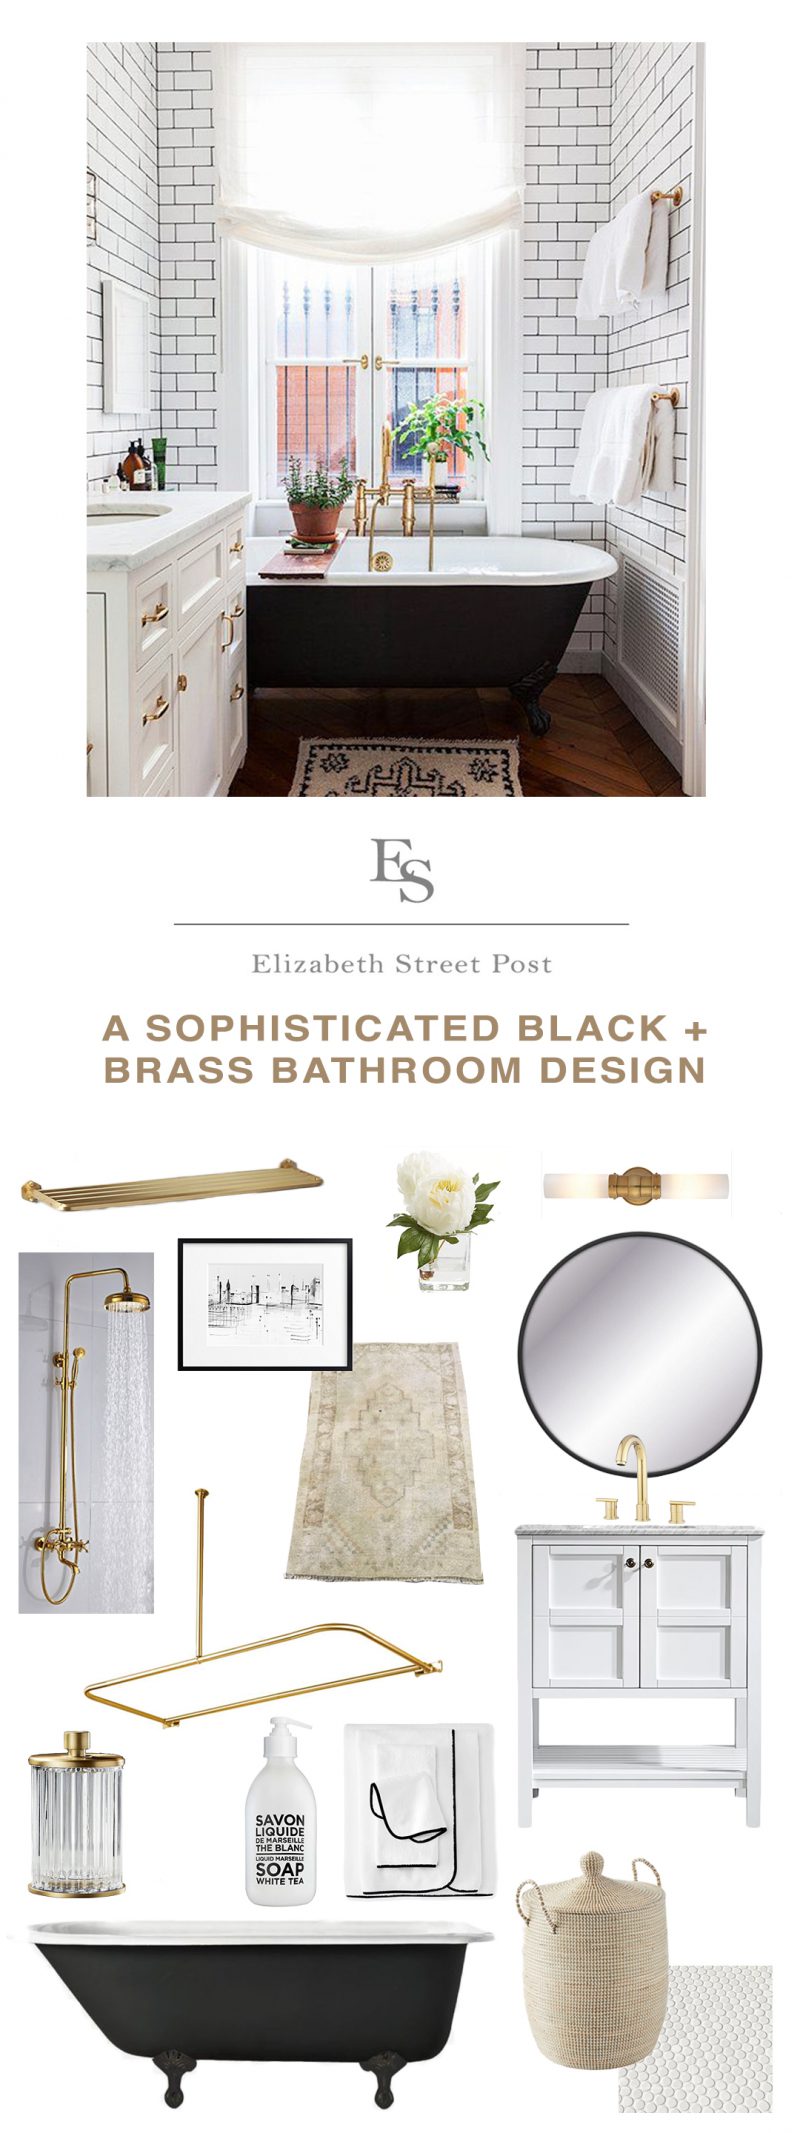 Design Files: How I'd Renovate a Bathroom Today - Elizabeth Street Post